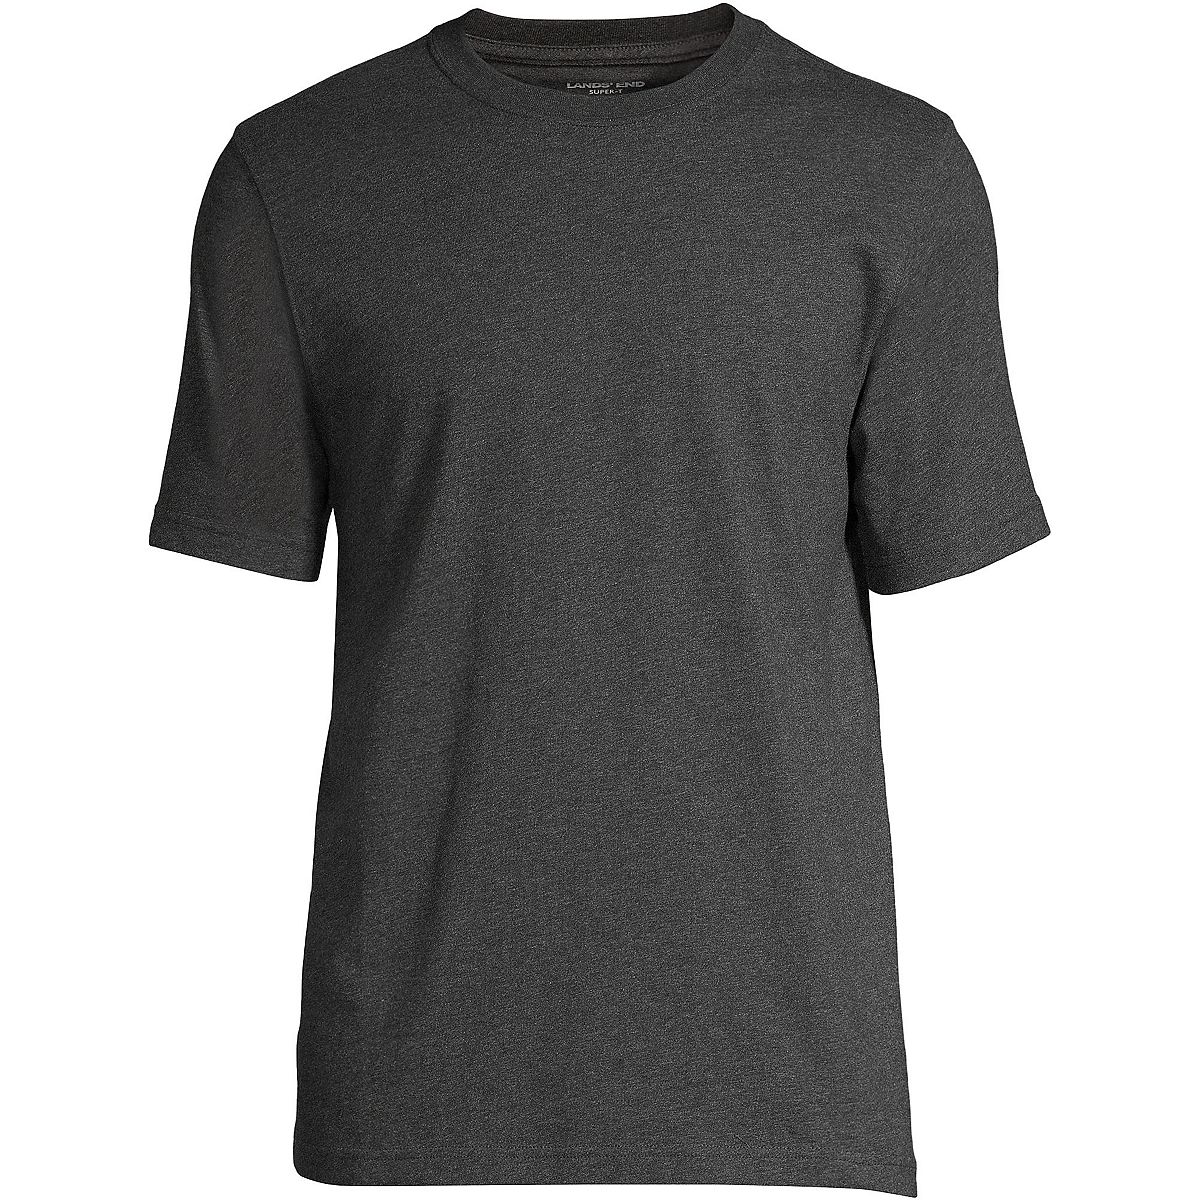 Мужская футболка с коротким рукавом Super-T для высоких мужчин Lands' End цена и фото